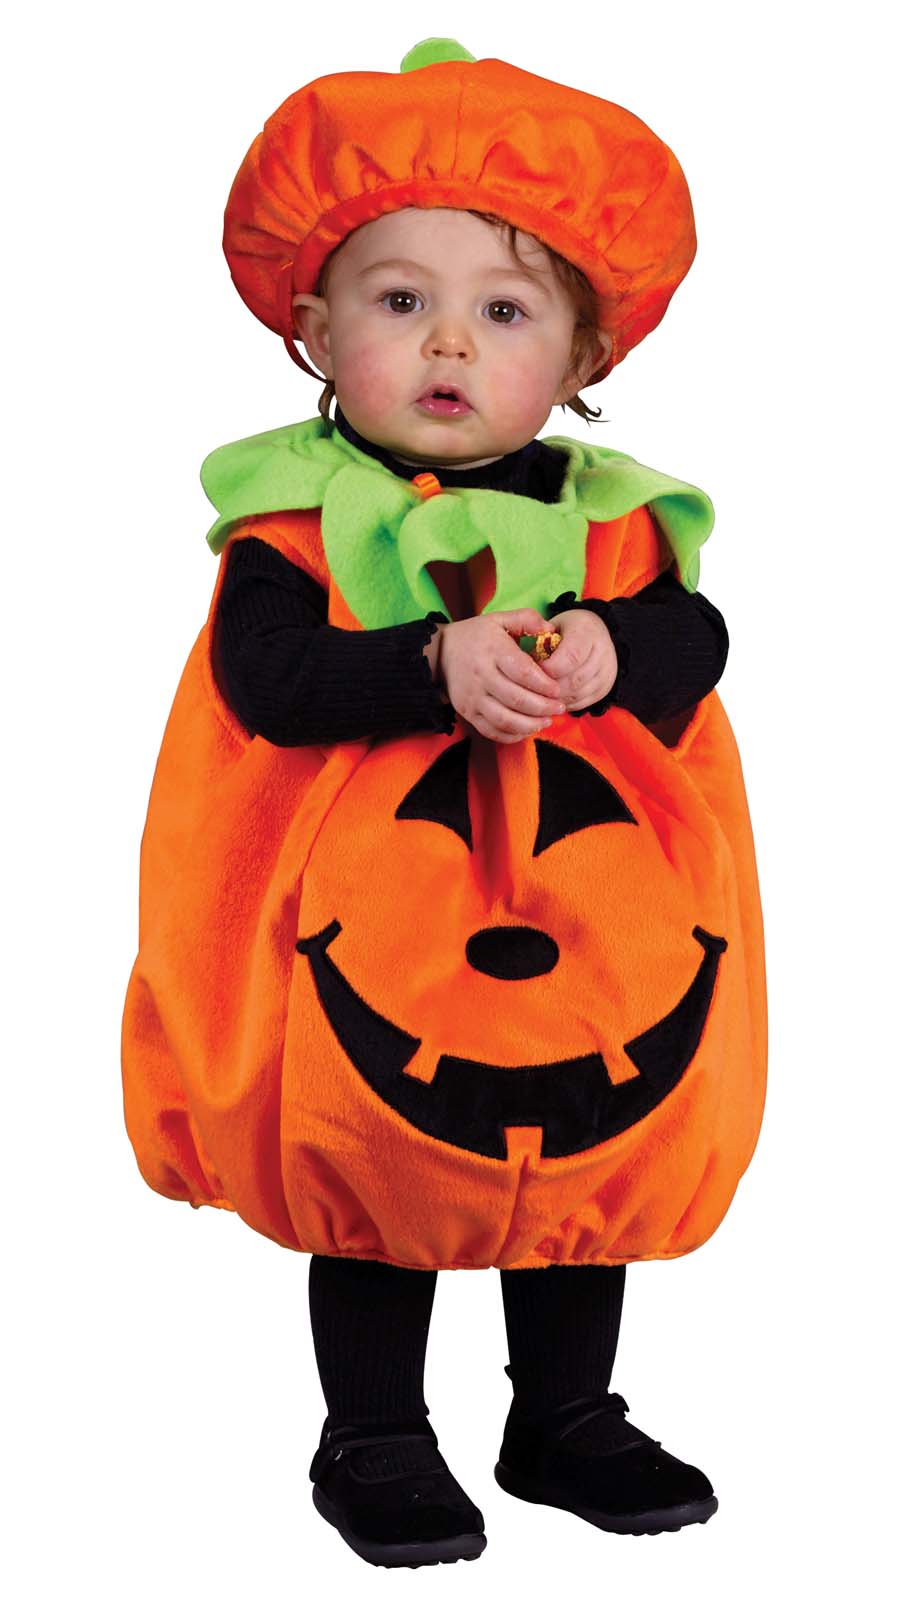 Cutie Pie Pumpkin Costume Infant Toddler Cute 12 24 months Baby Hat ...